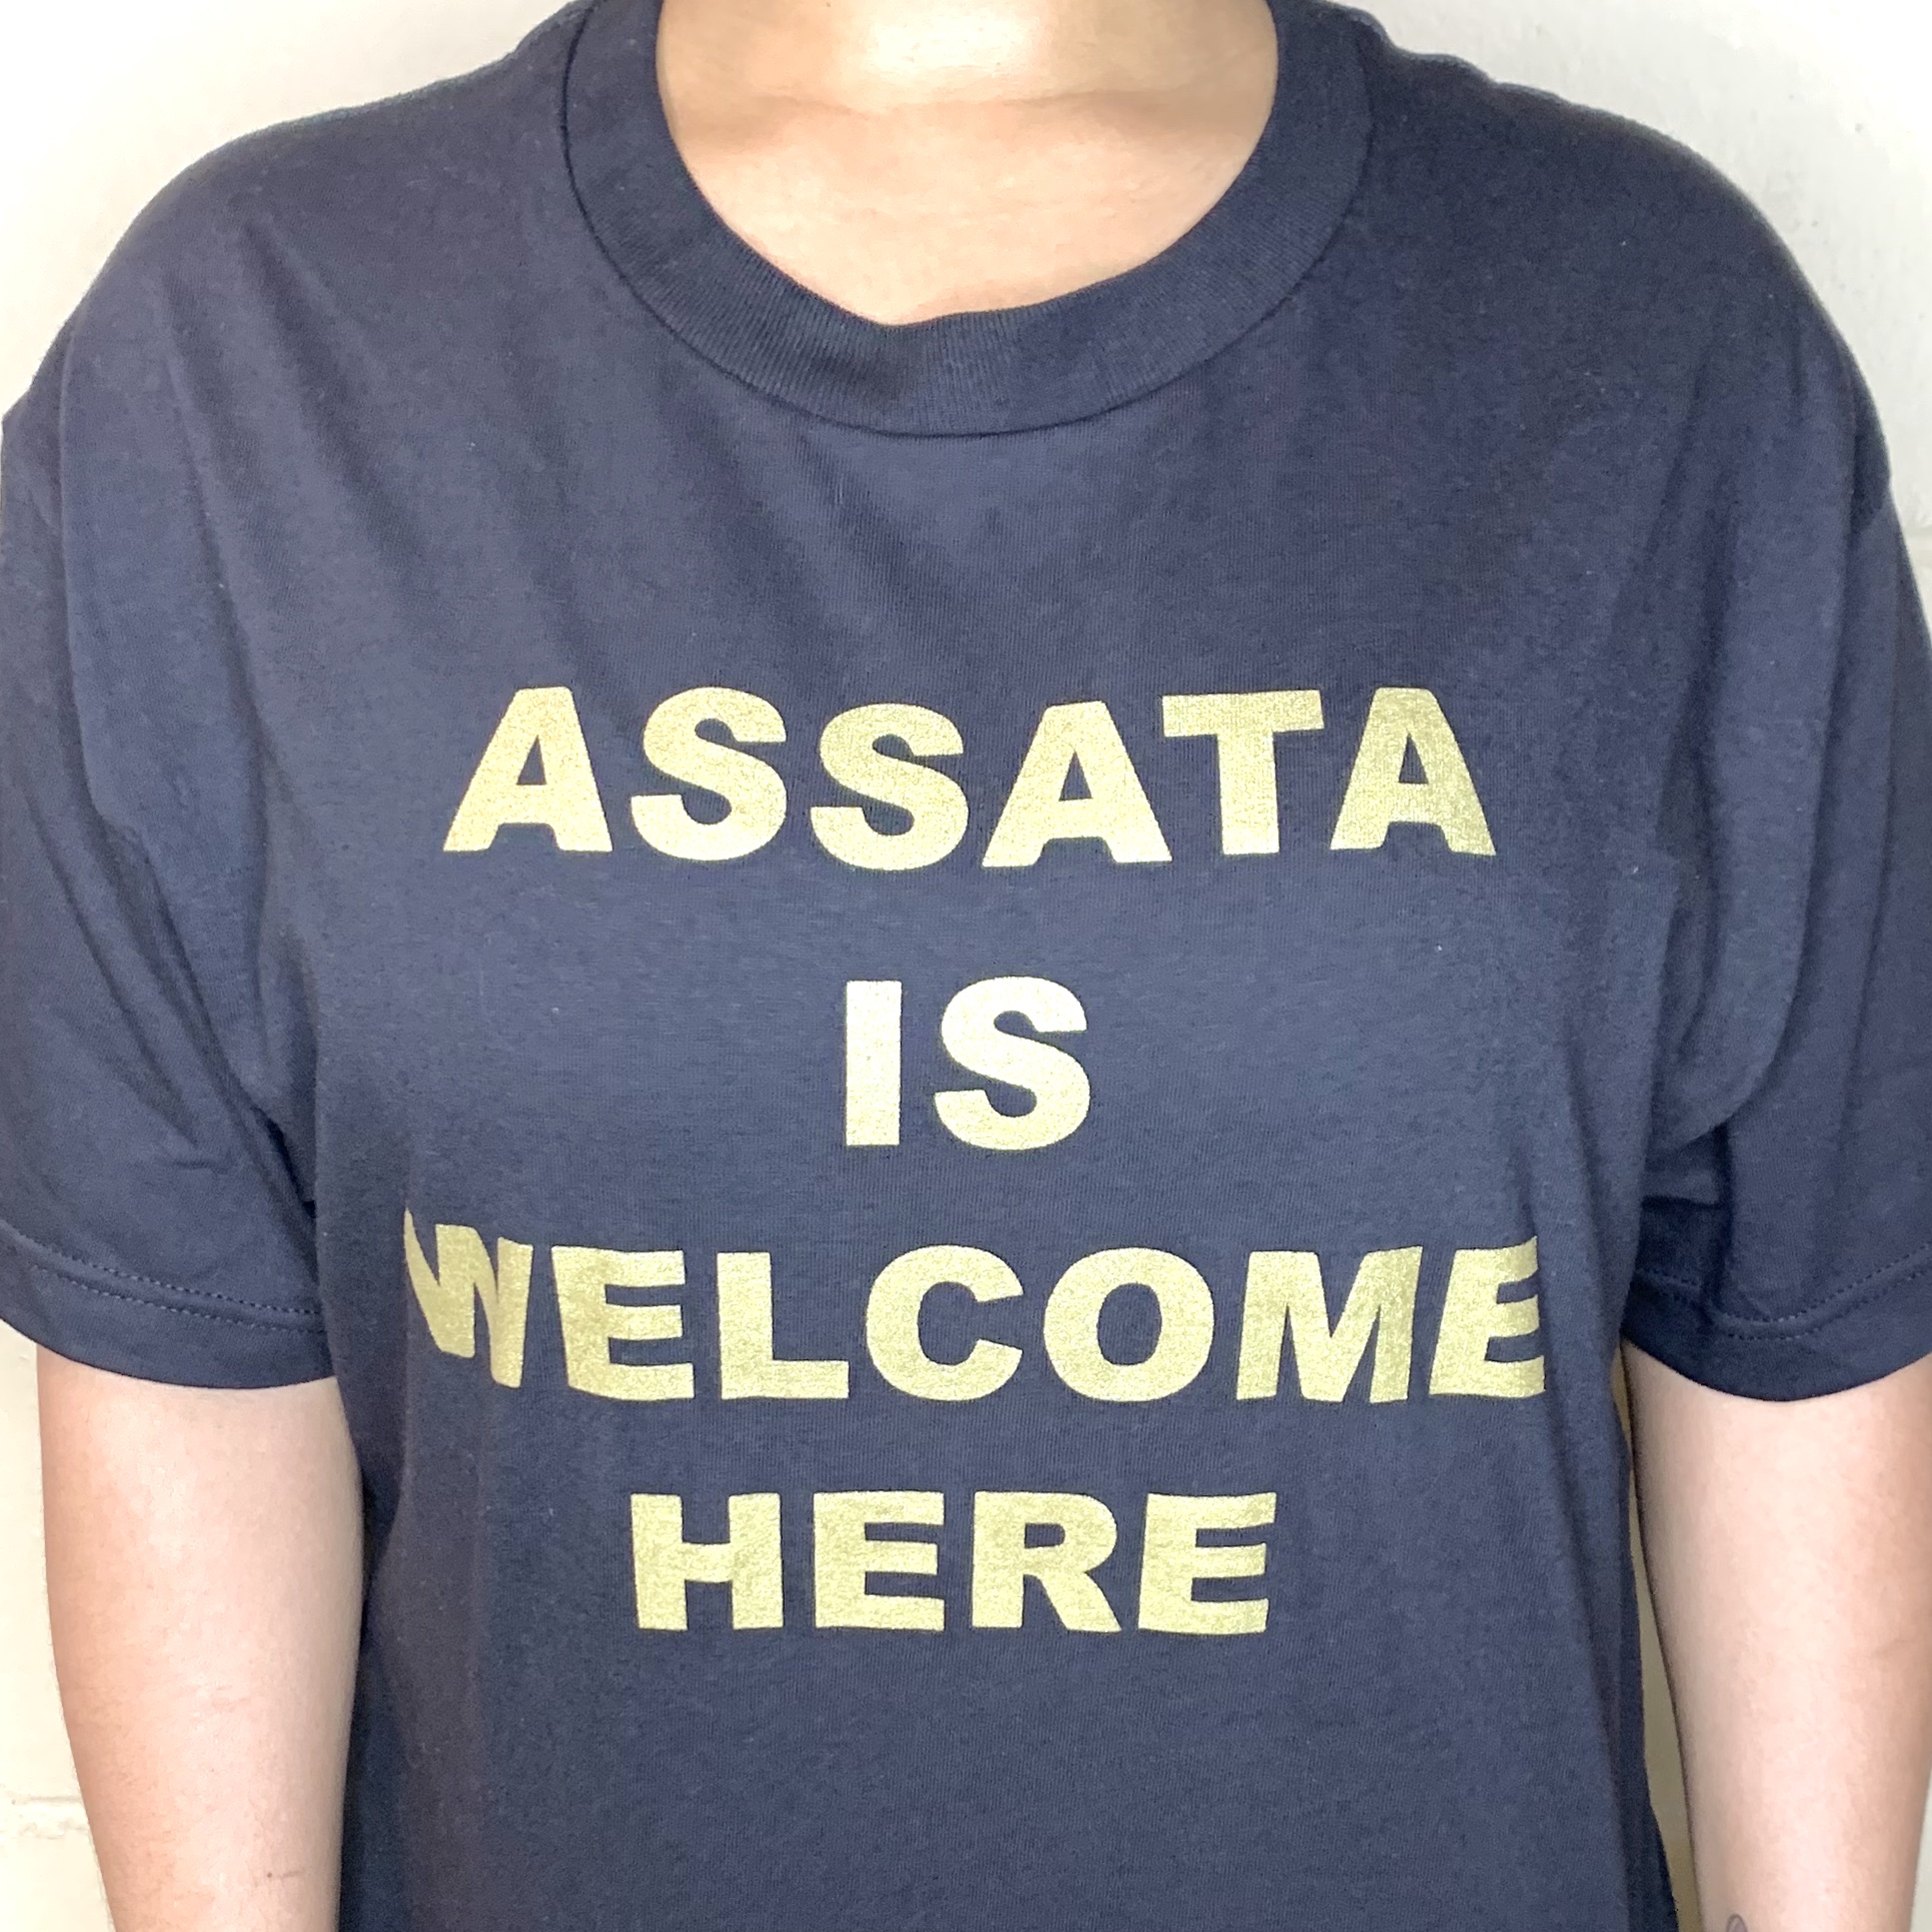 Assata is Welcome Here T-Shirt Demo for The Homegirl Box June 2020